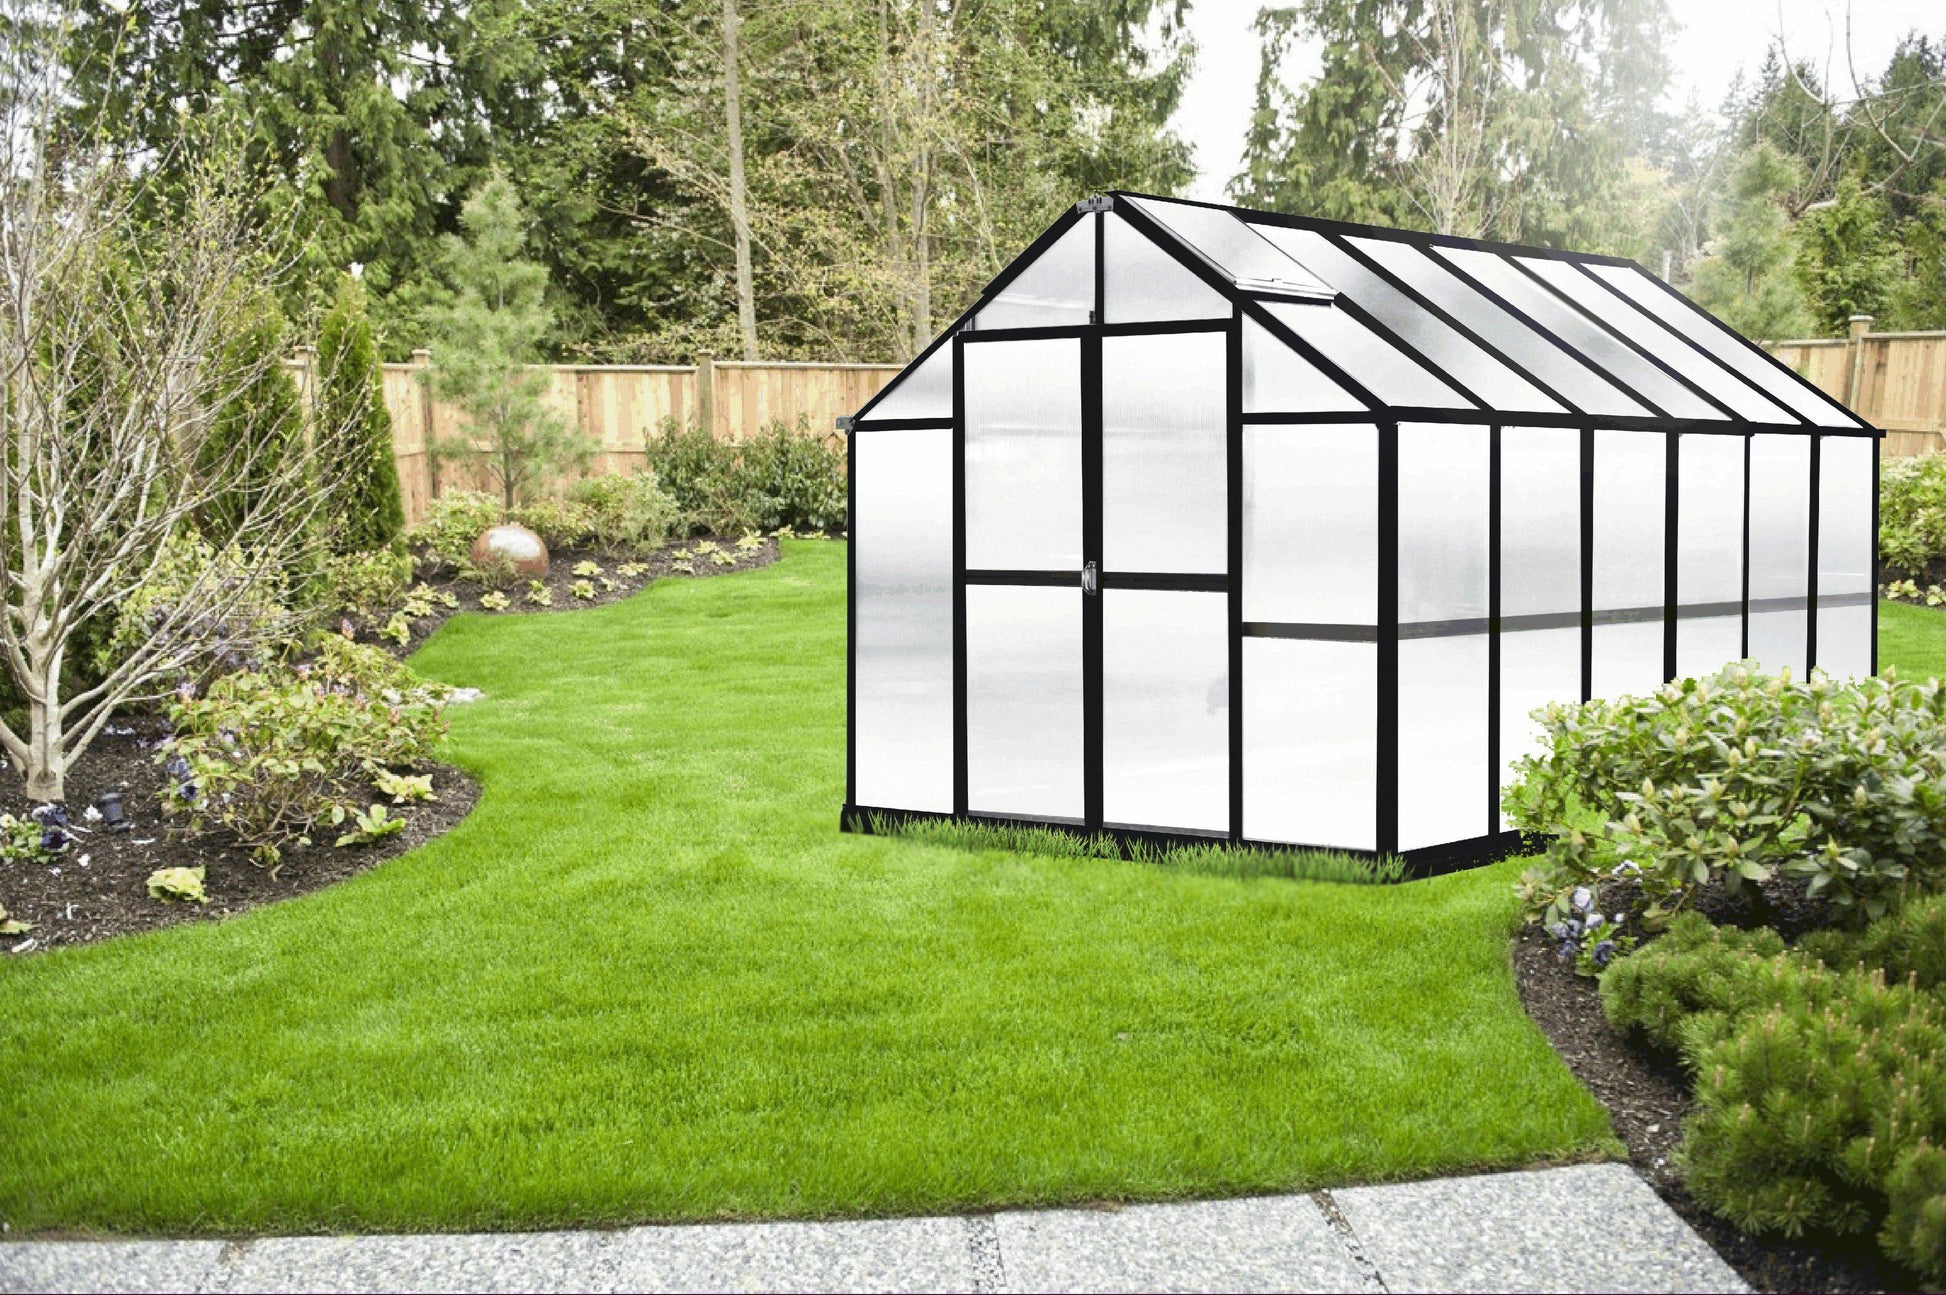 Lumen & Forge 20ft Geodesic Dome | Greenhouse Emporium